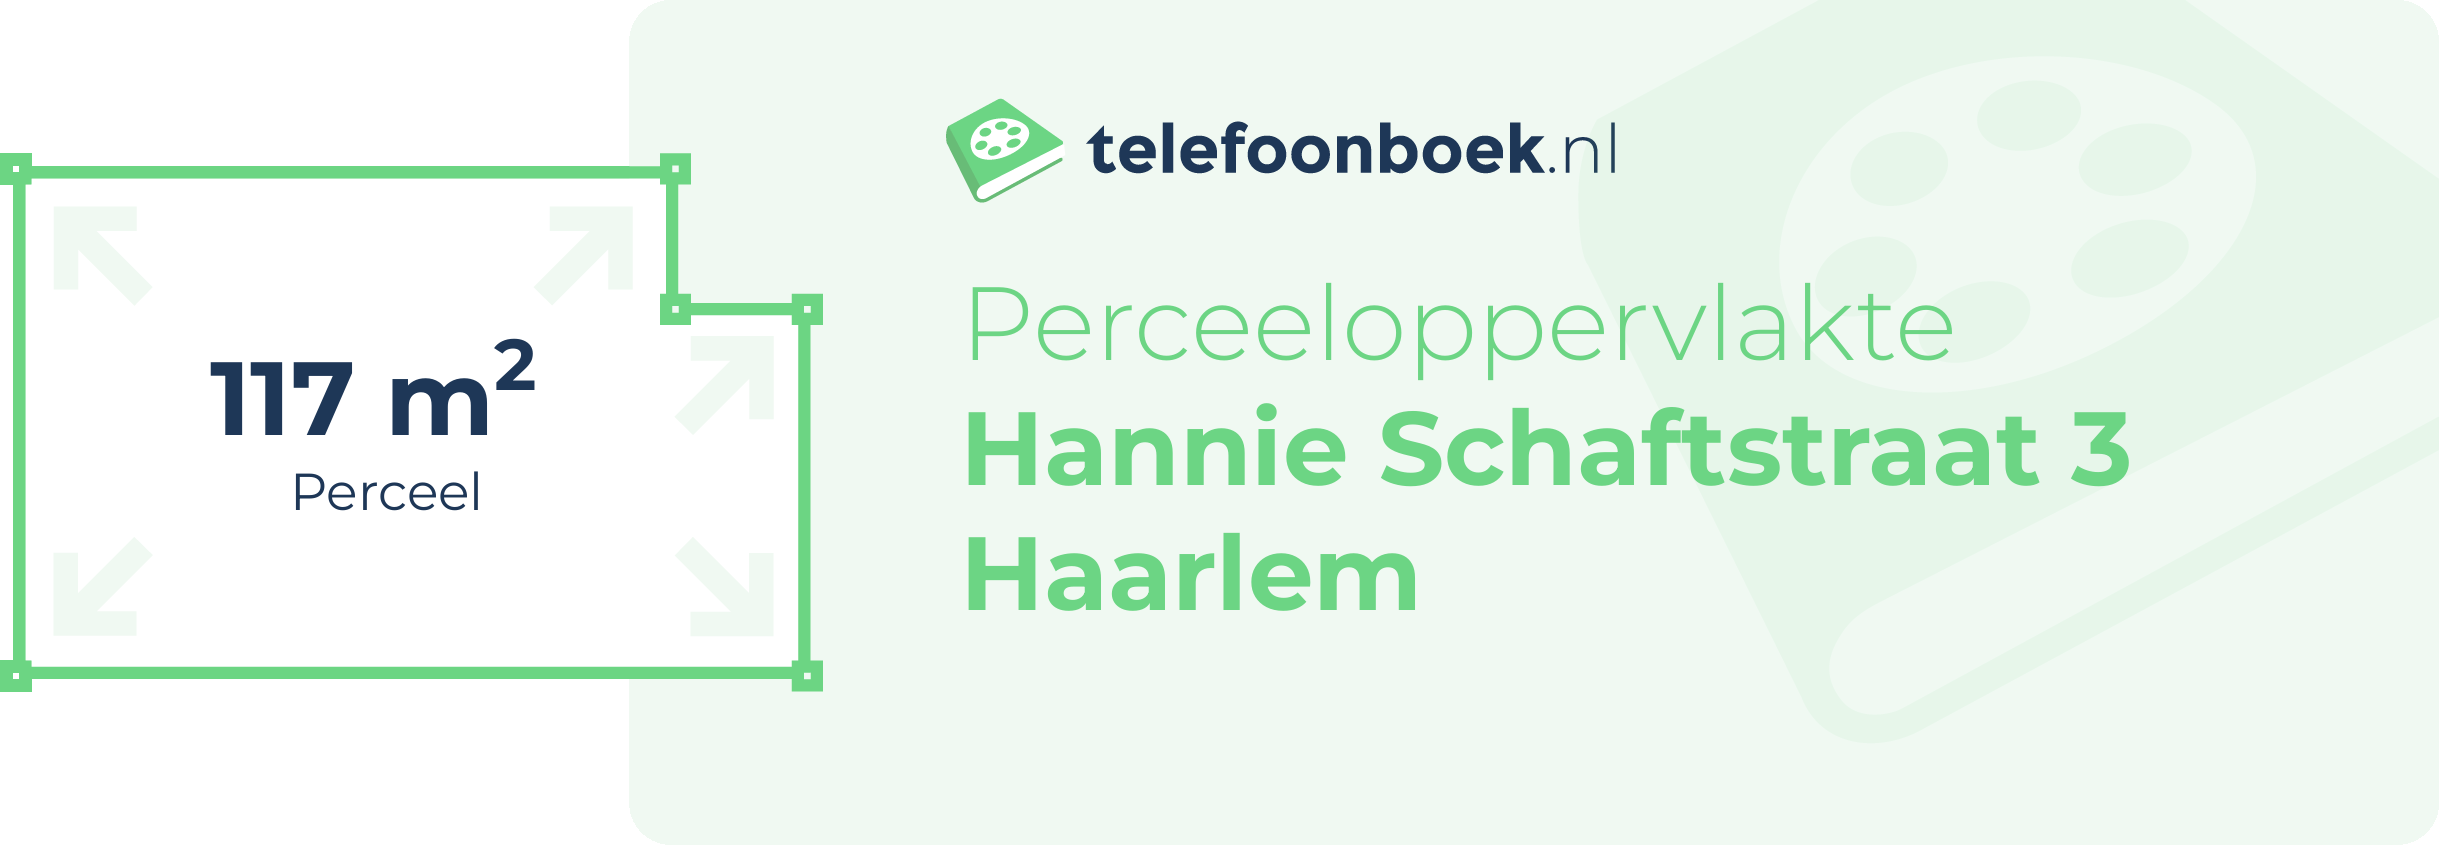 Perceeloppervlakte Hannie Schaftstraat 3 Haarlem